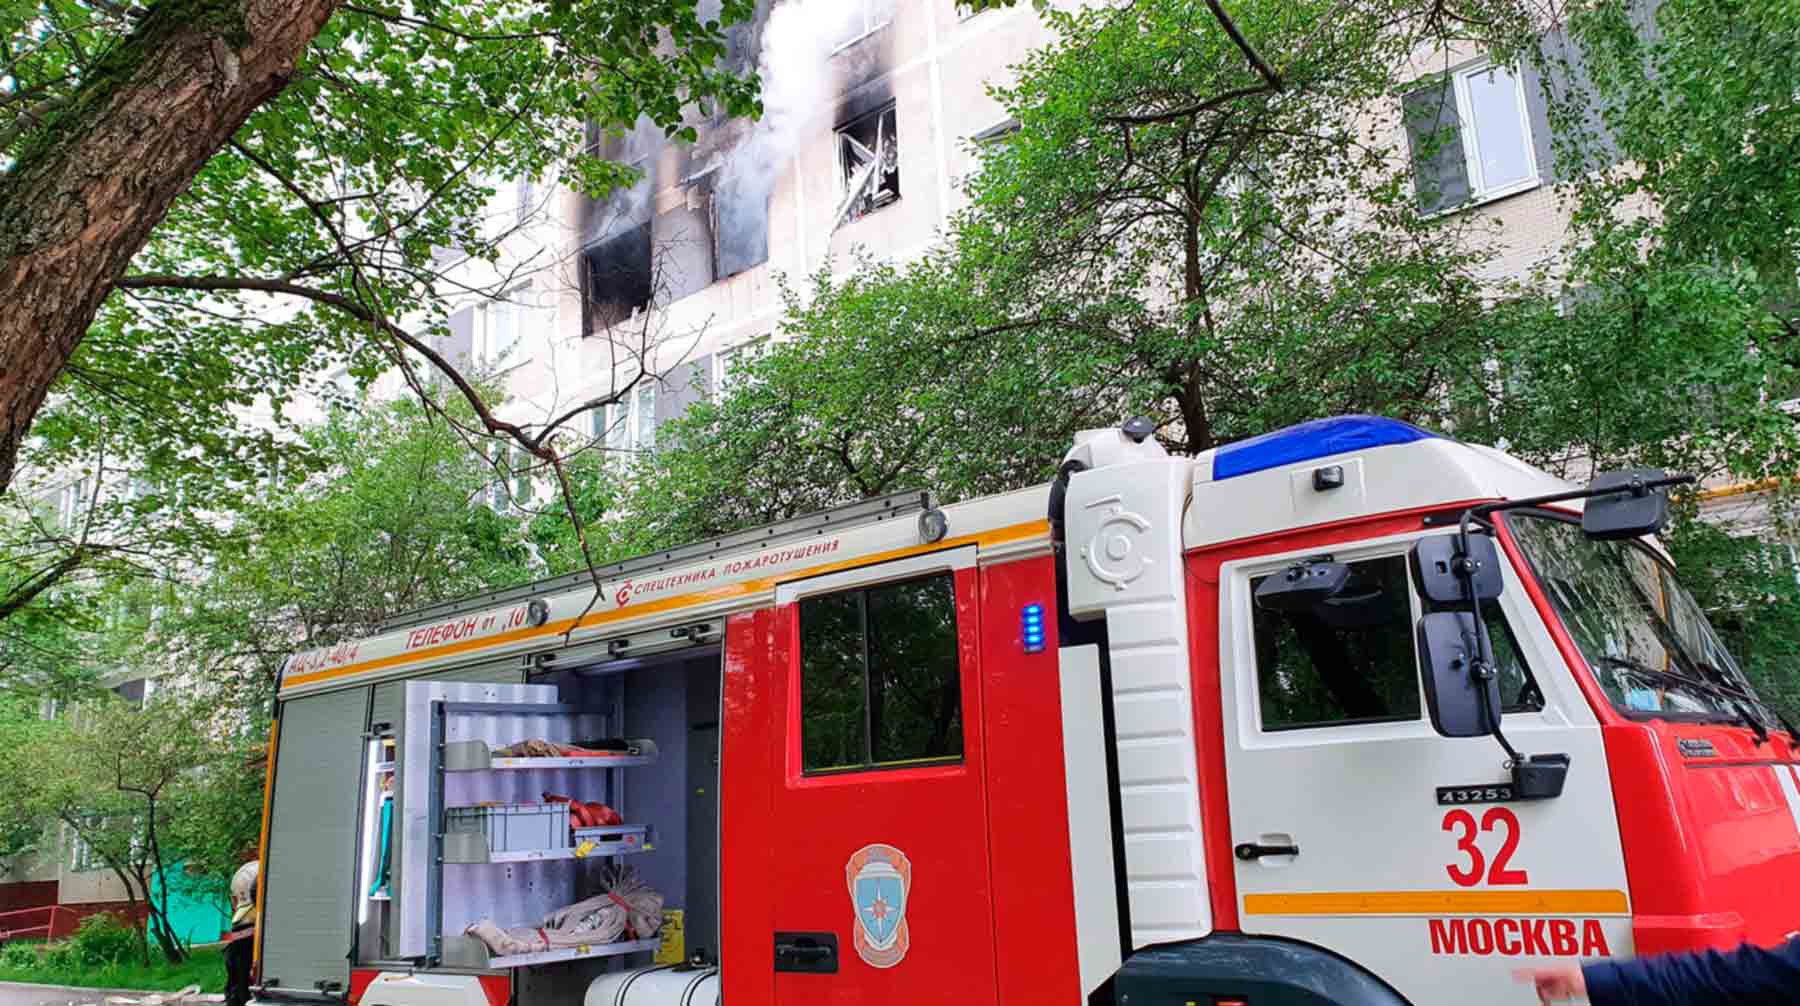 Dailystorm - Один человек погиб и один ранен при взрыве в доме в Москве — видео